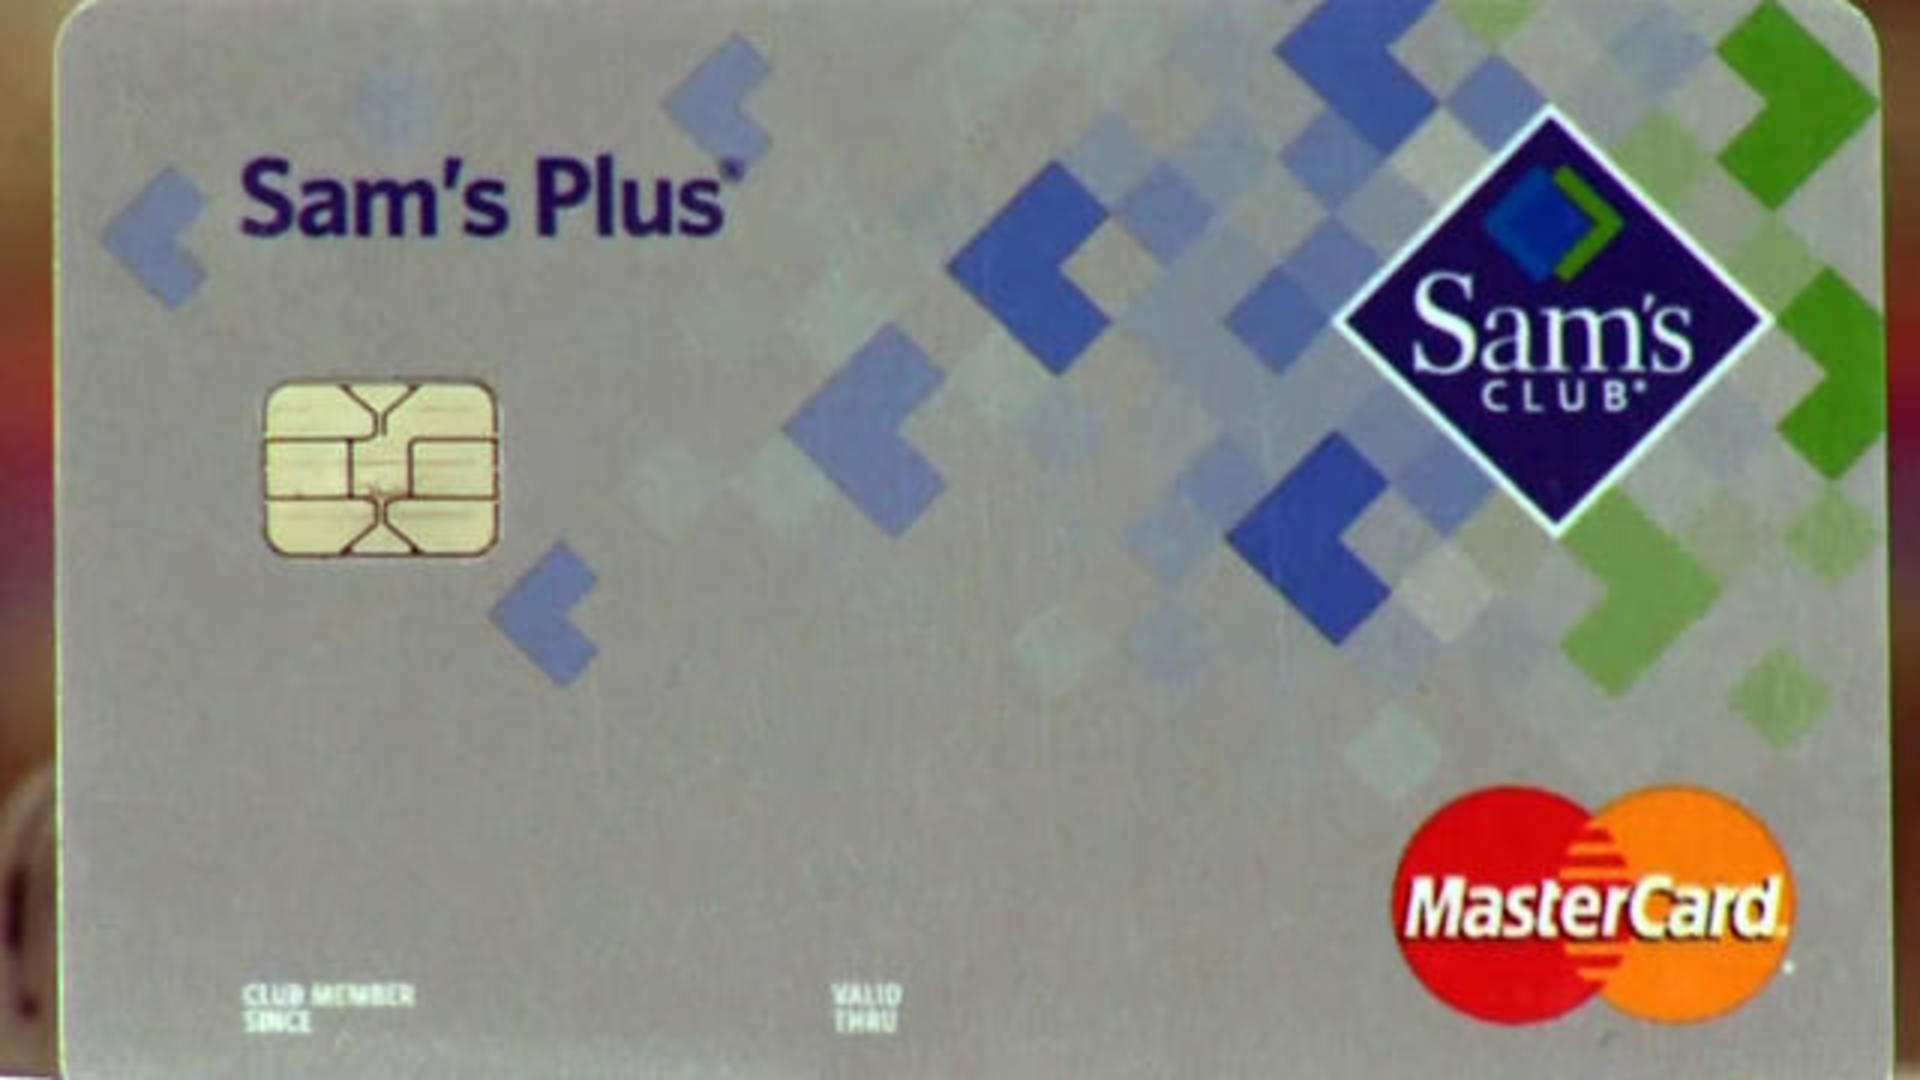 Sam's Club offers chip card to prevent fraud - CBS News